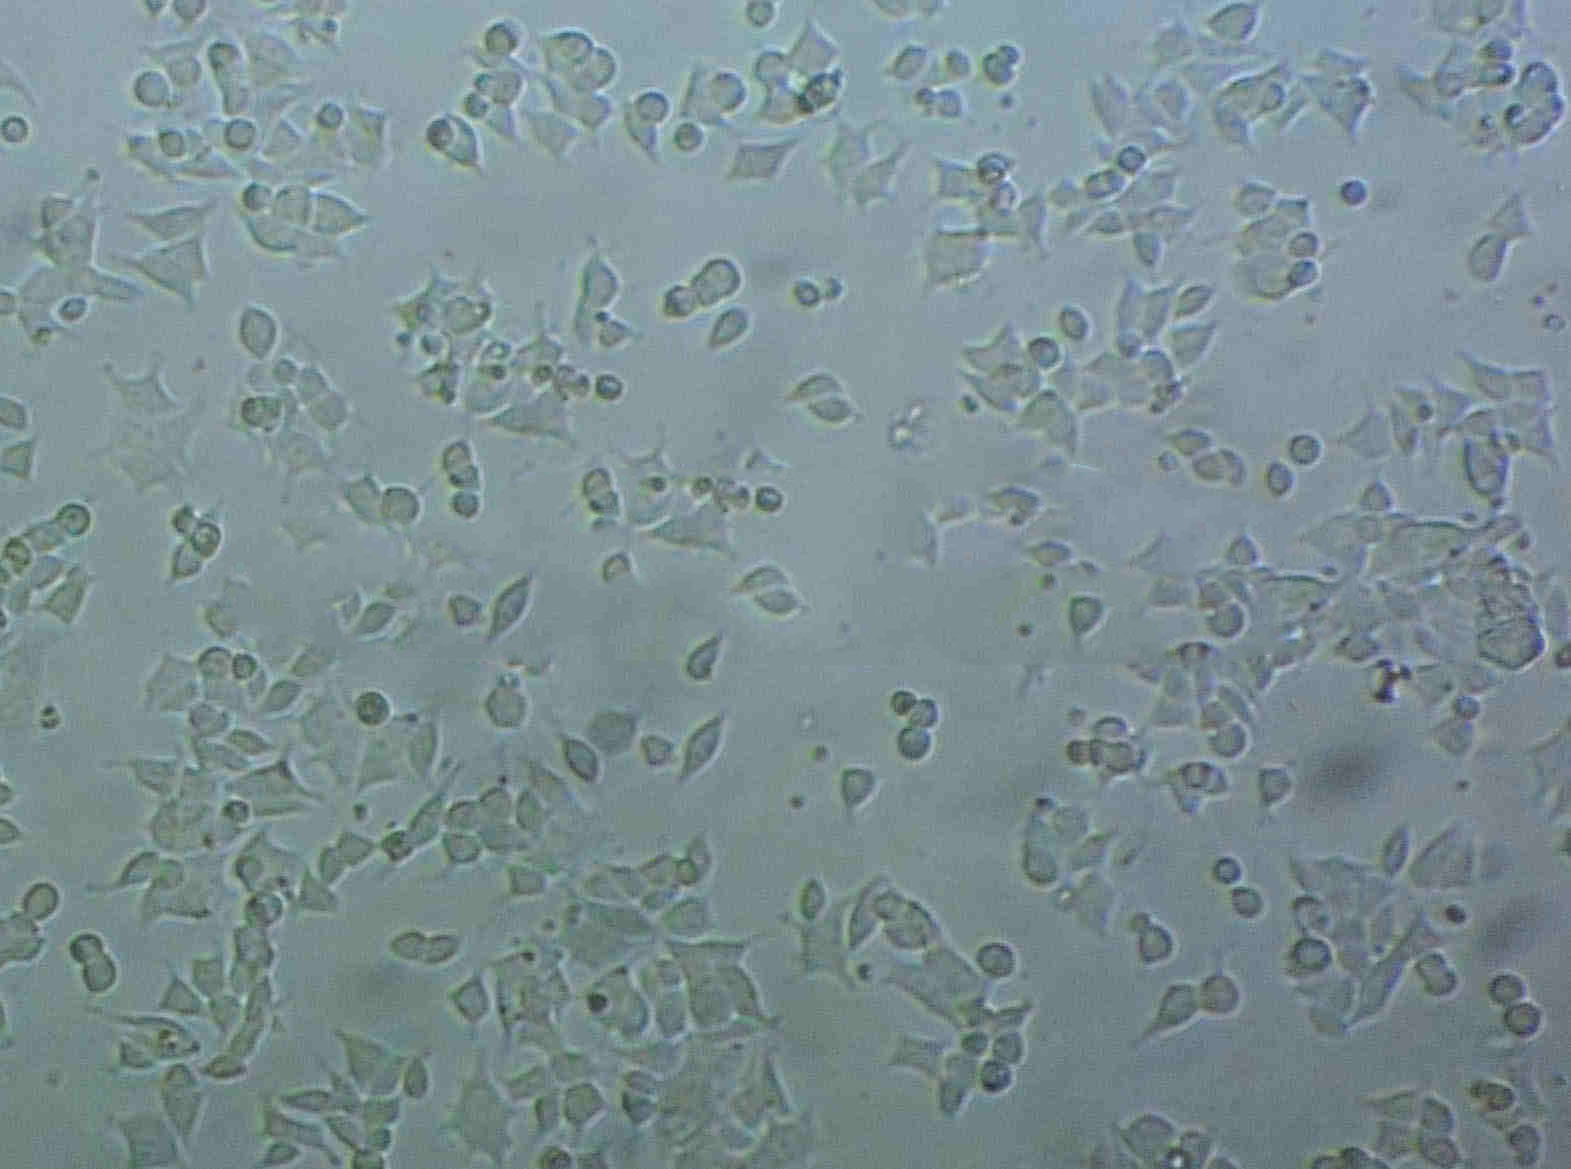 NIT-1 Cell|小鼠胰腺β细胞